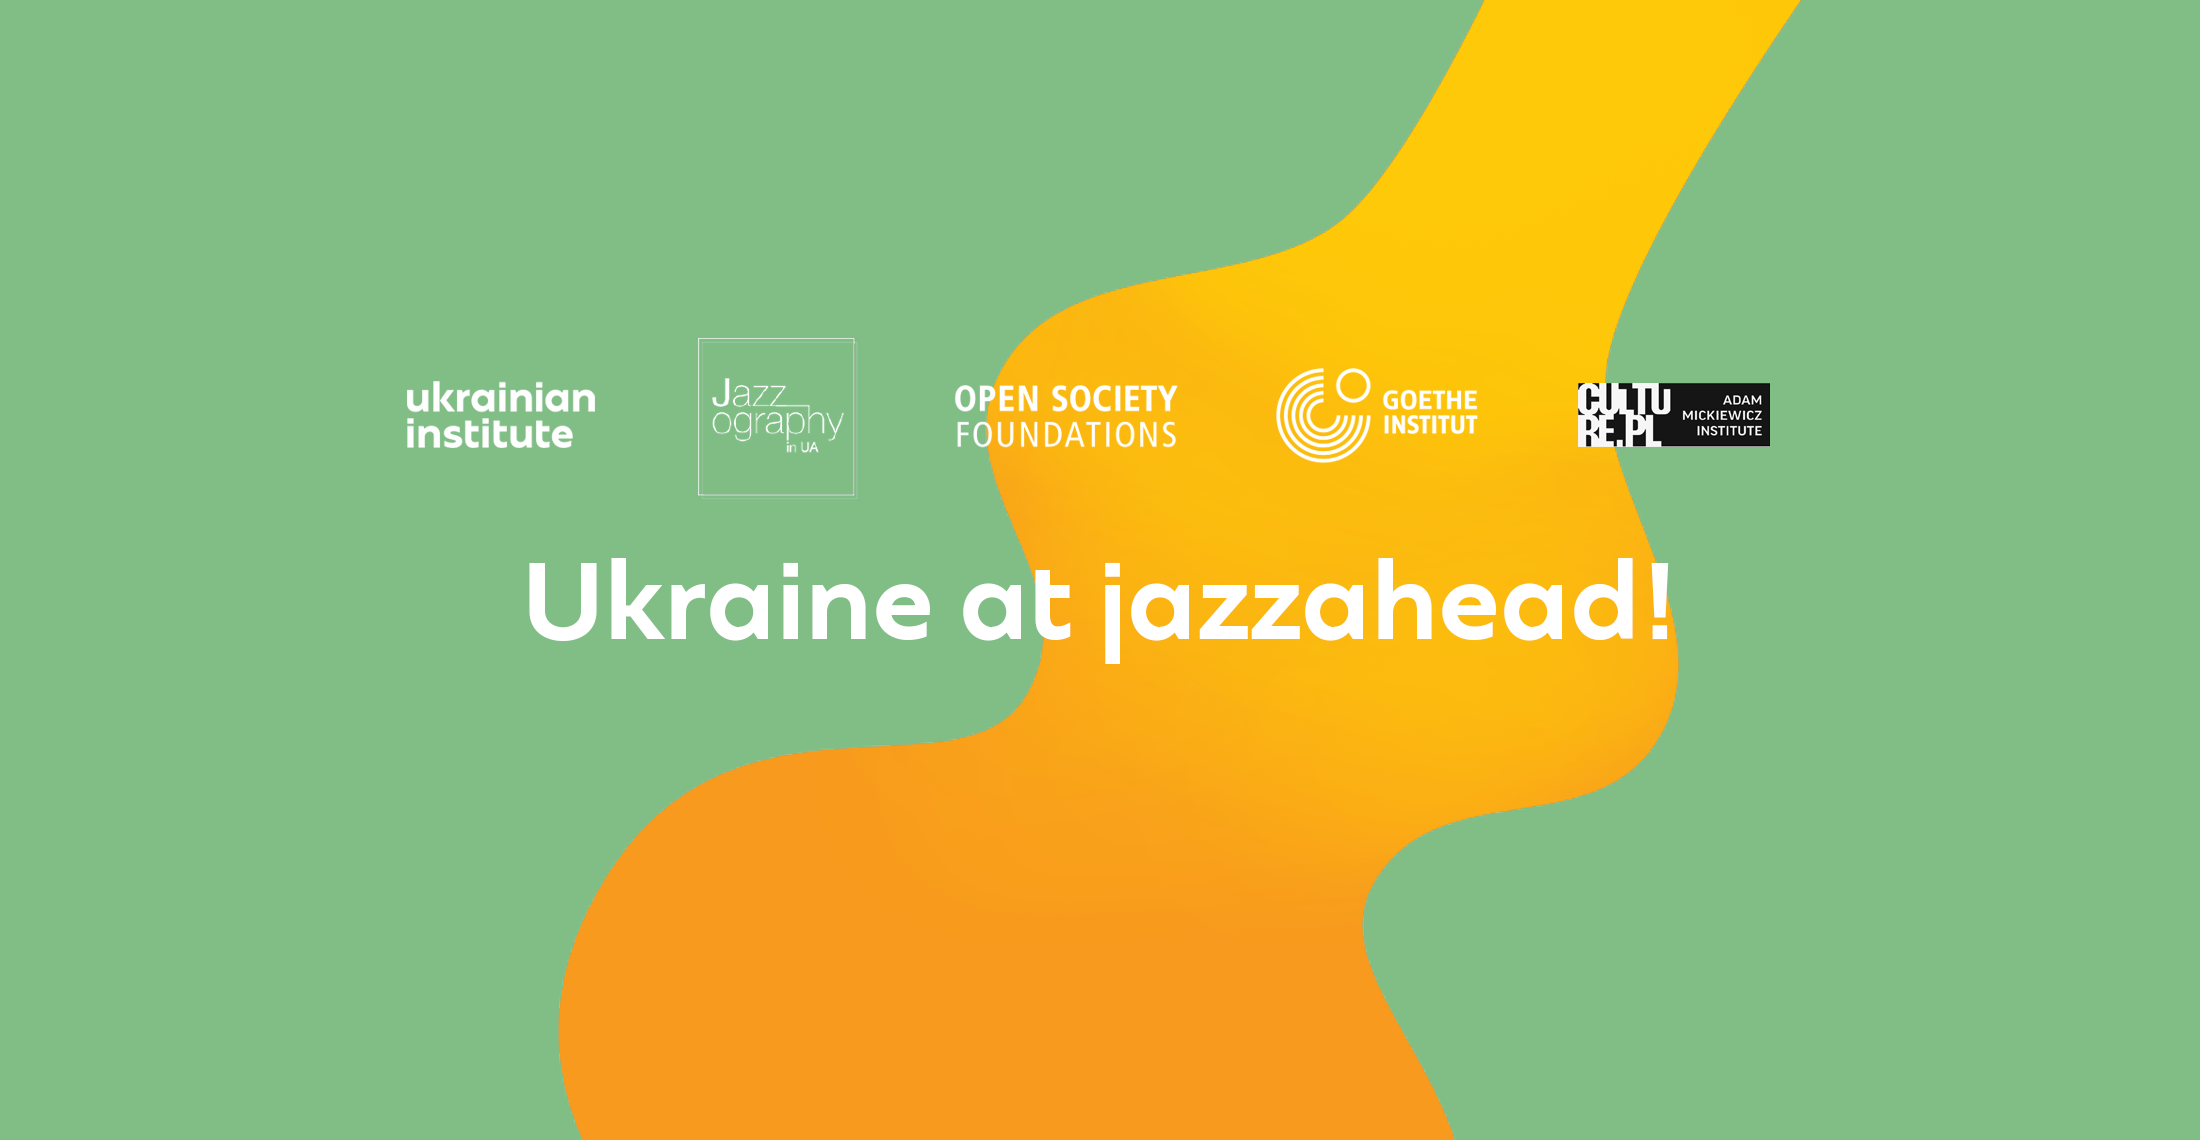 Ukraine at the showcase festival jazzahead!